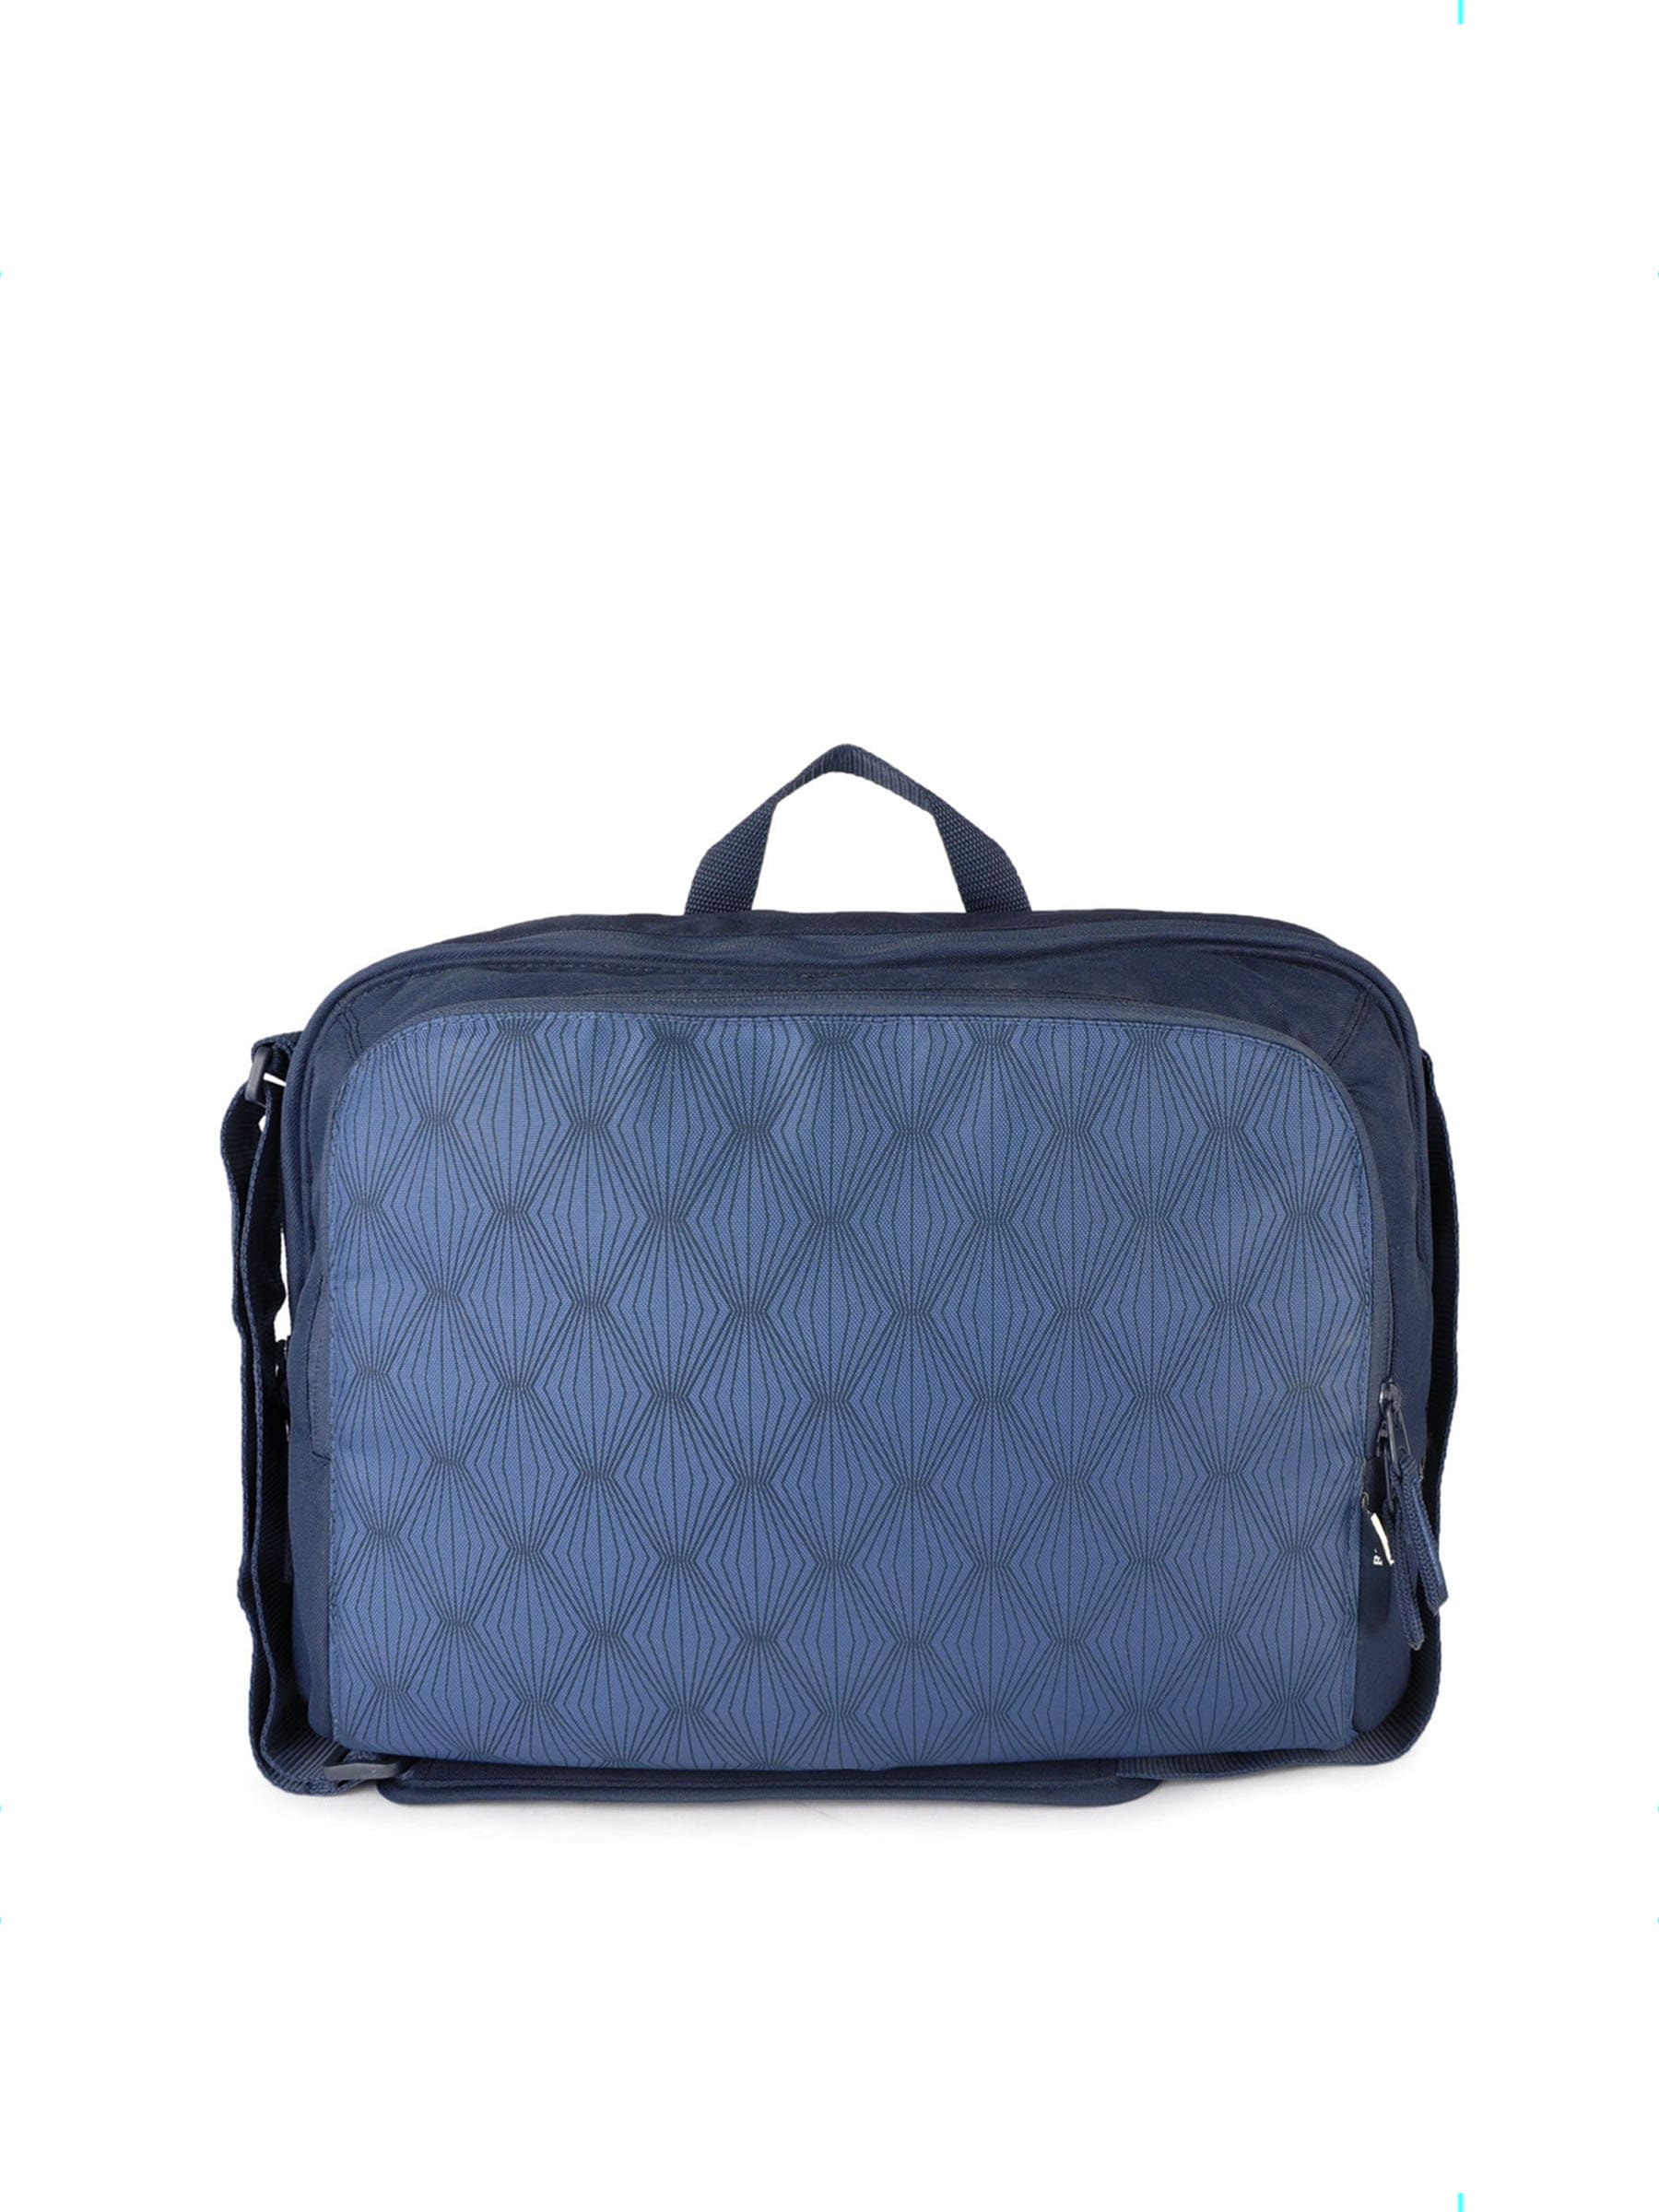 Belkin Unisex Simple Messenger Blue Handbags